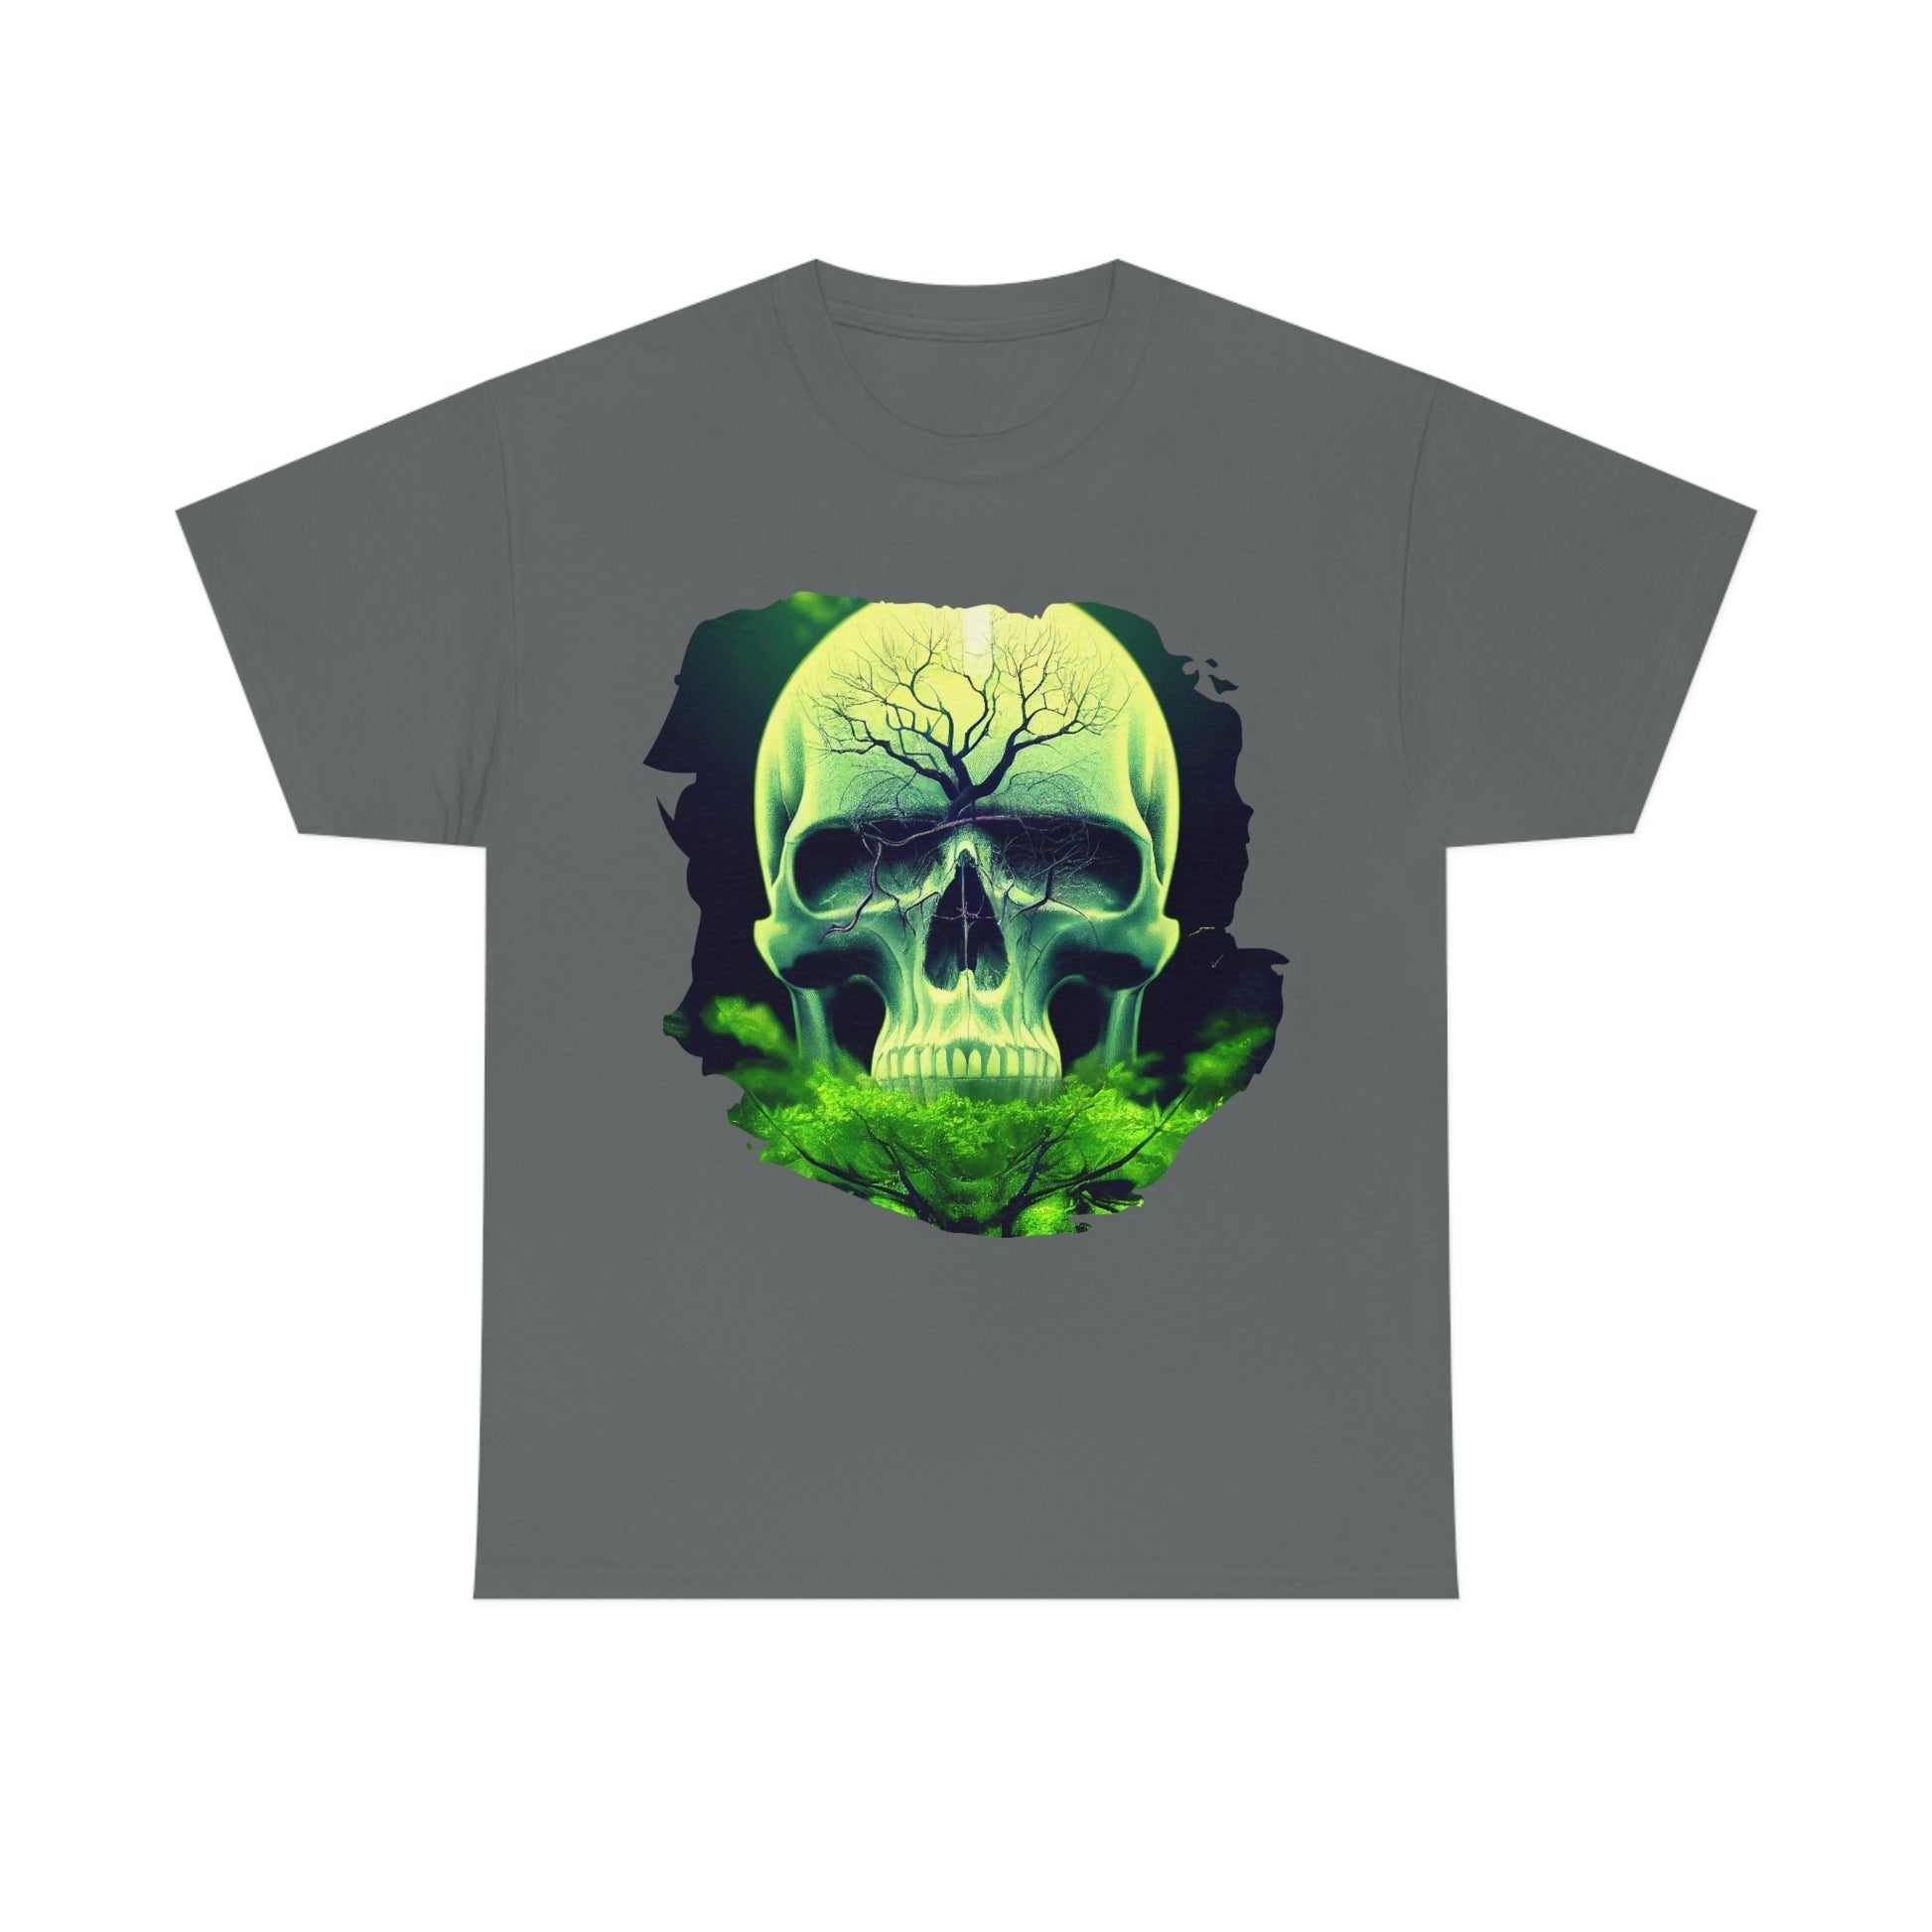 Yggdrasil Green Skull T-Shirt, Cool Viking Shirt, Unisex Graphic Tee